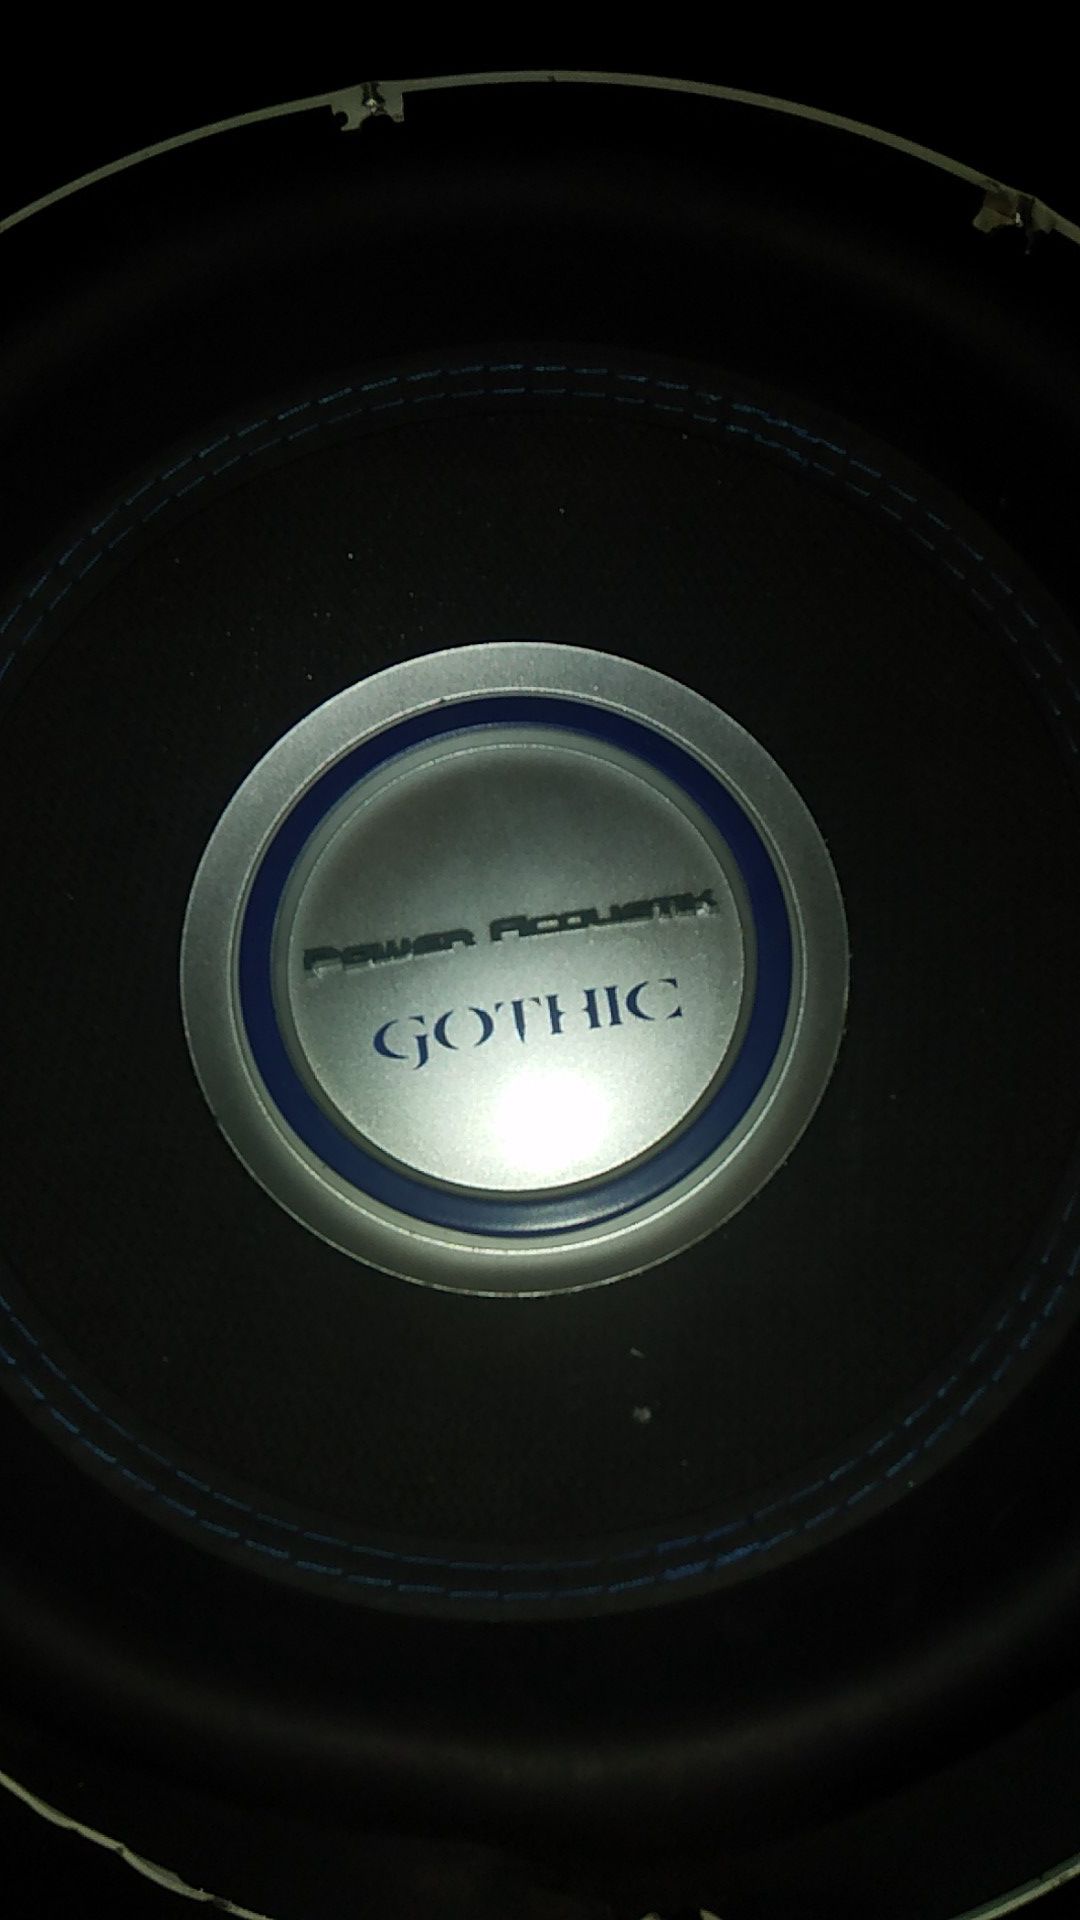 Power accustik gothic 12' sub 2500 watts peak power $75